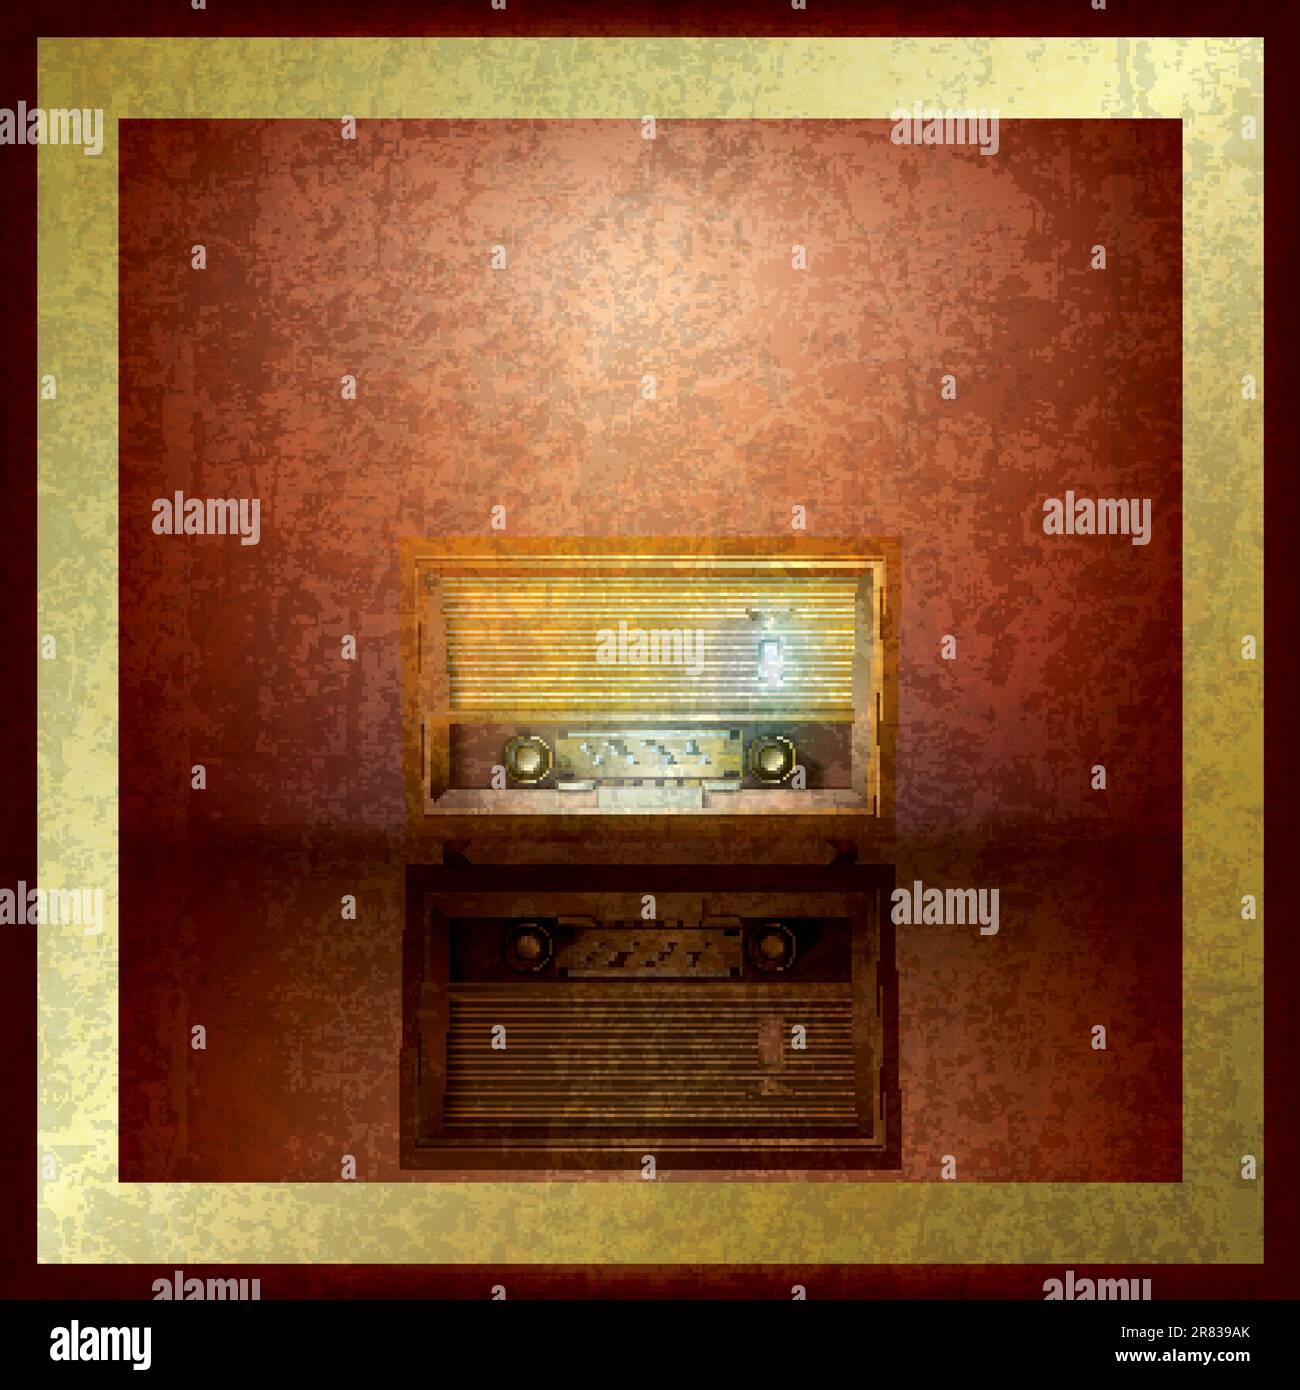 Abstract grunge fond marron avec radio rétro Illustration de Vecteur